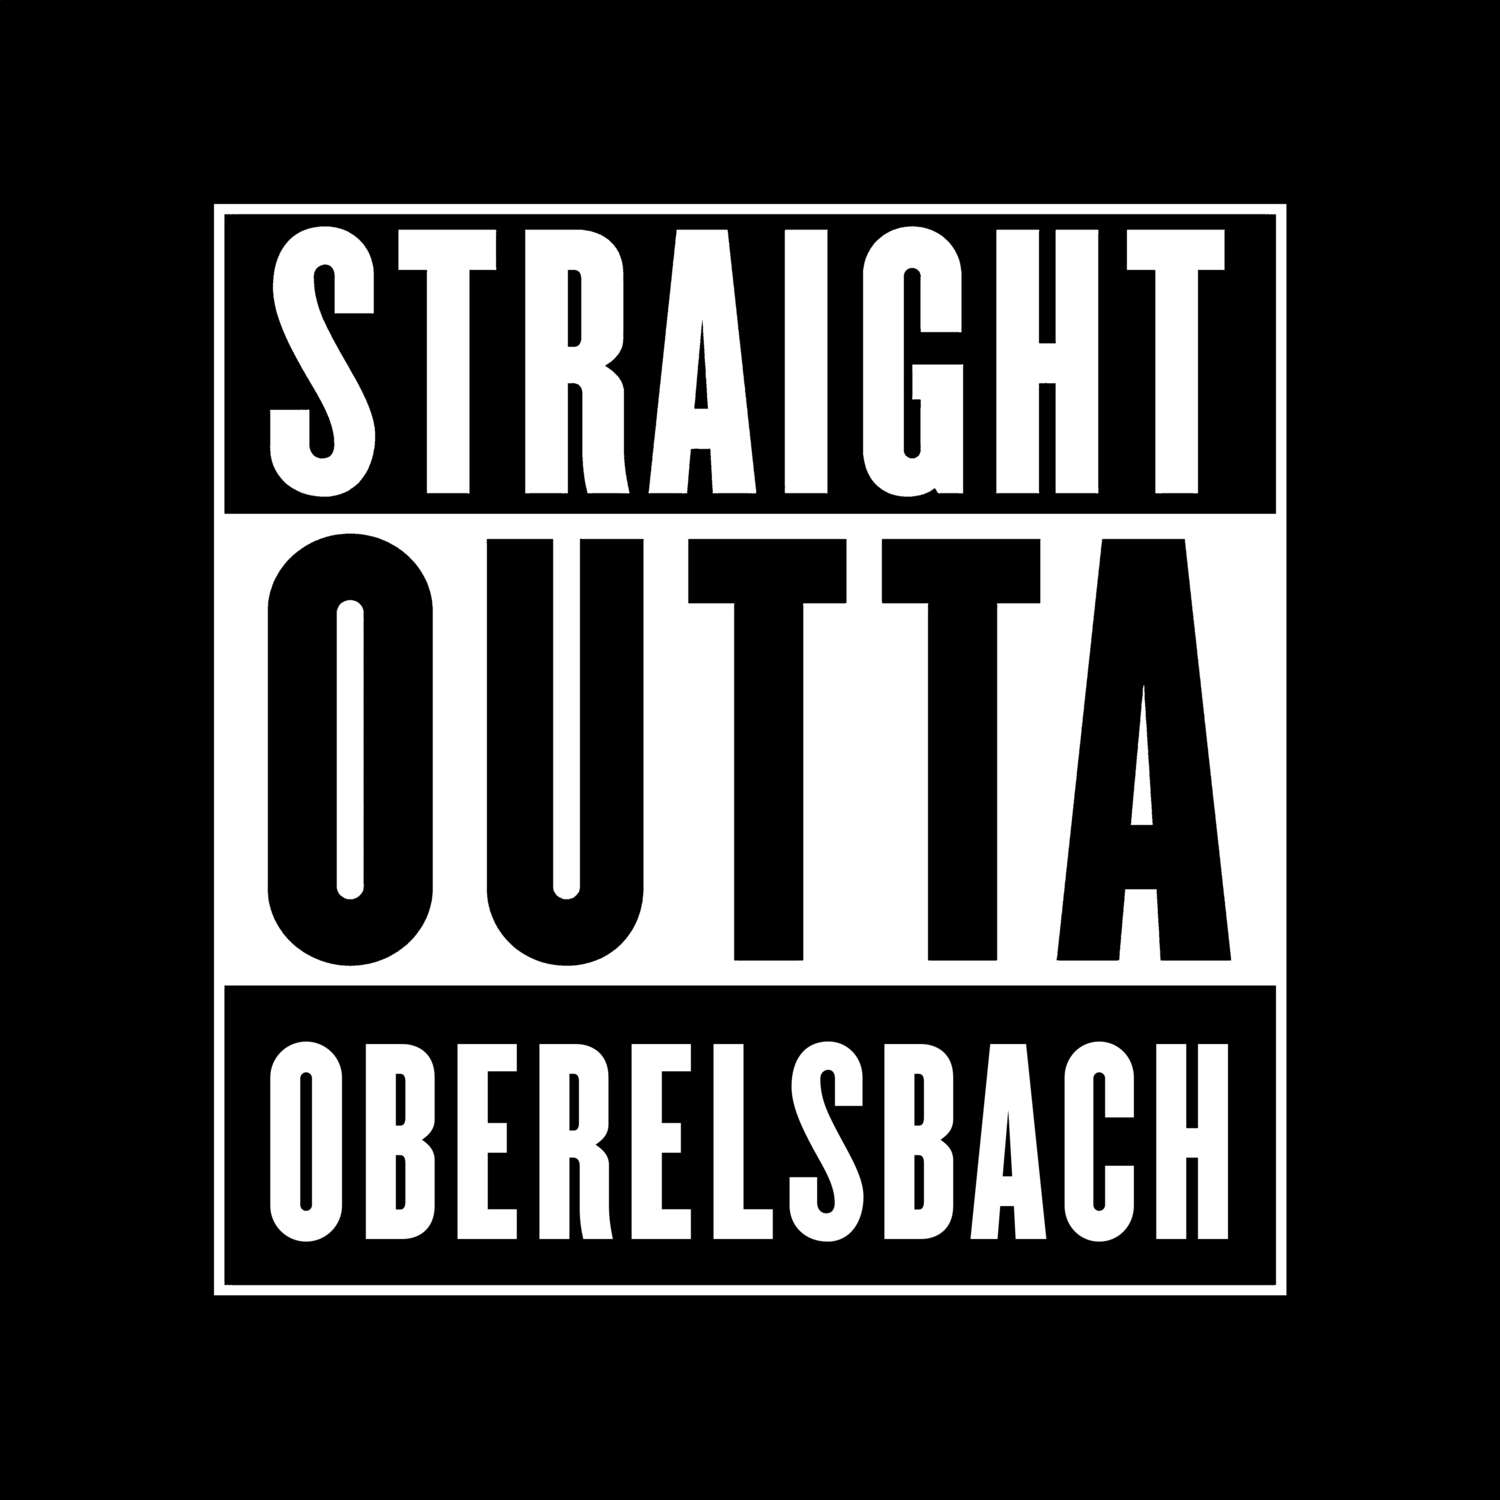 Oberelsbach T-Shirt »Straight Outta«